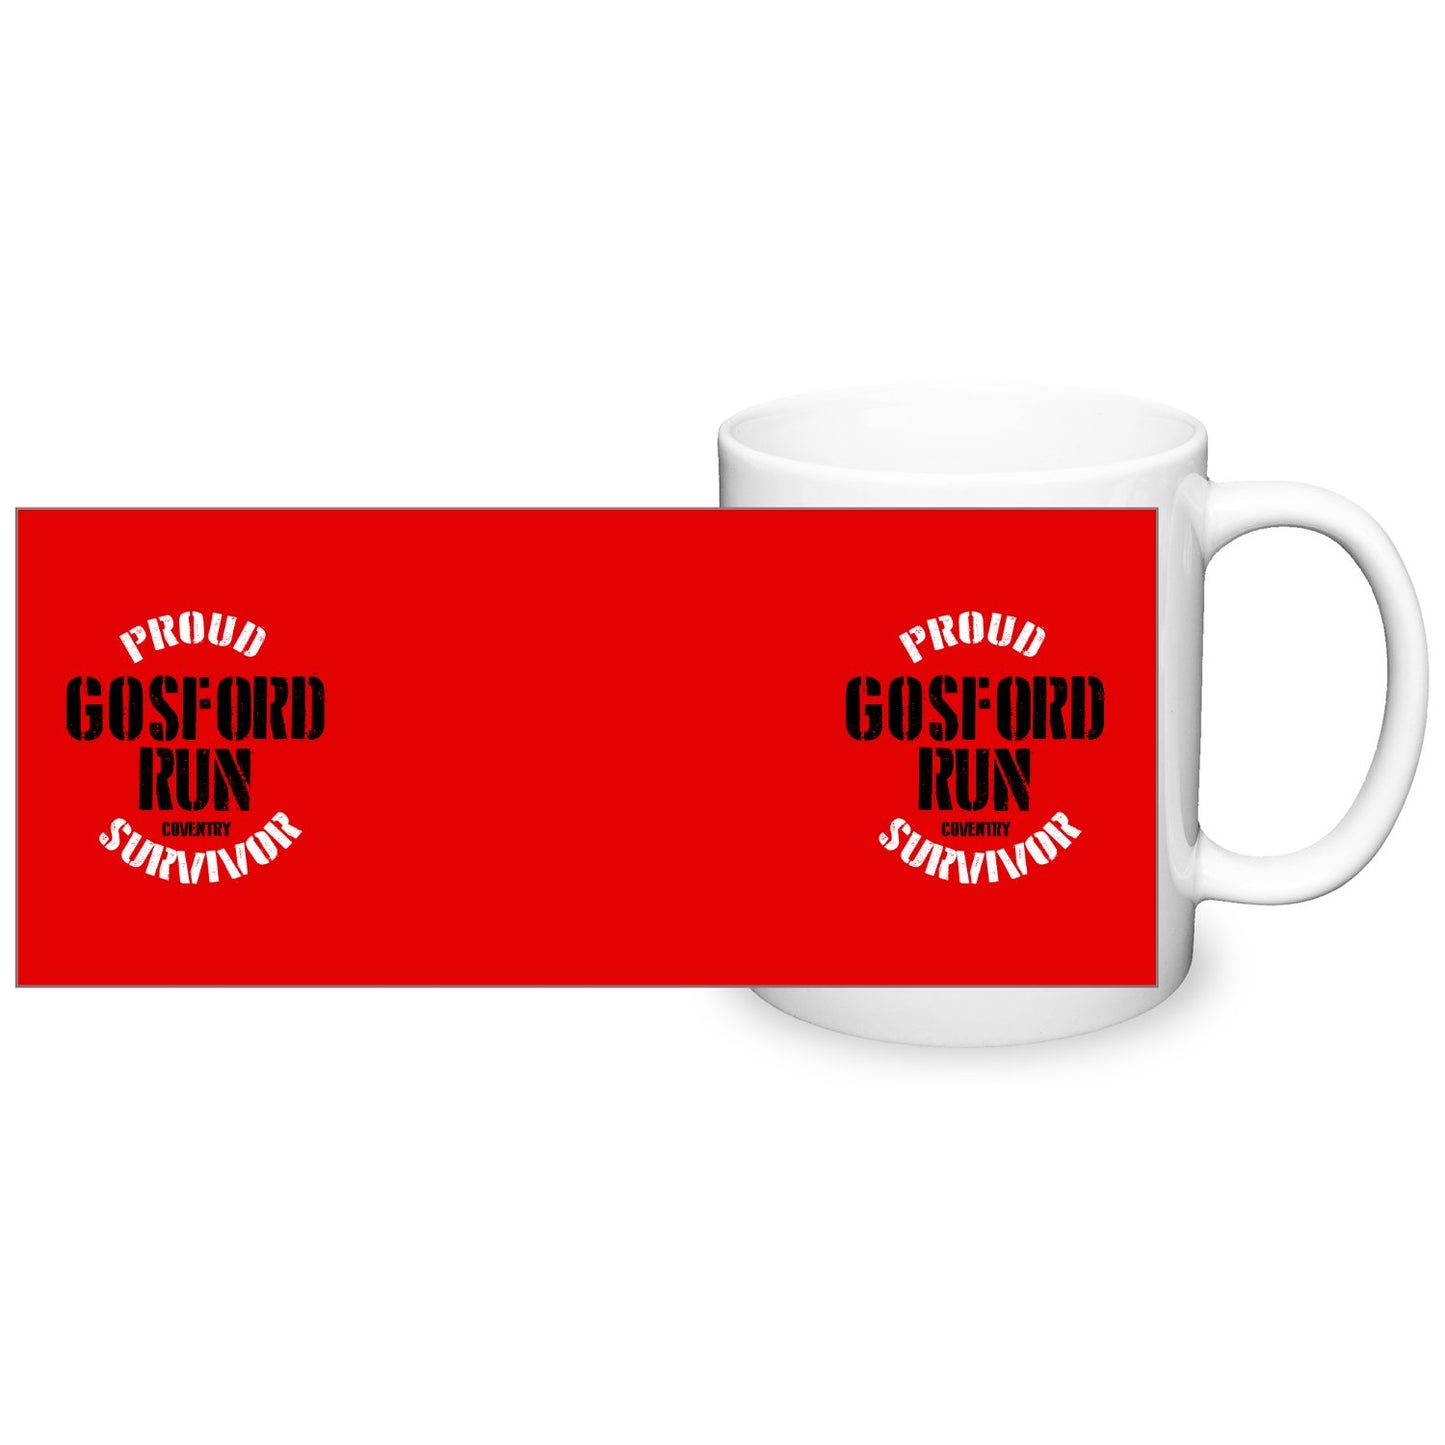 Gosford Run Survivor - Coventry - mug - Dirty Stop Outs